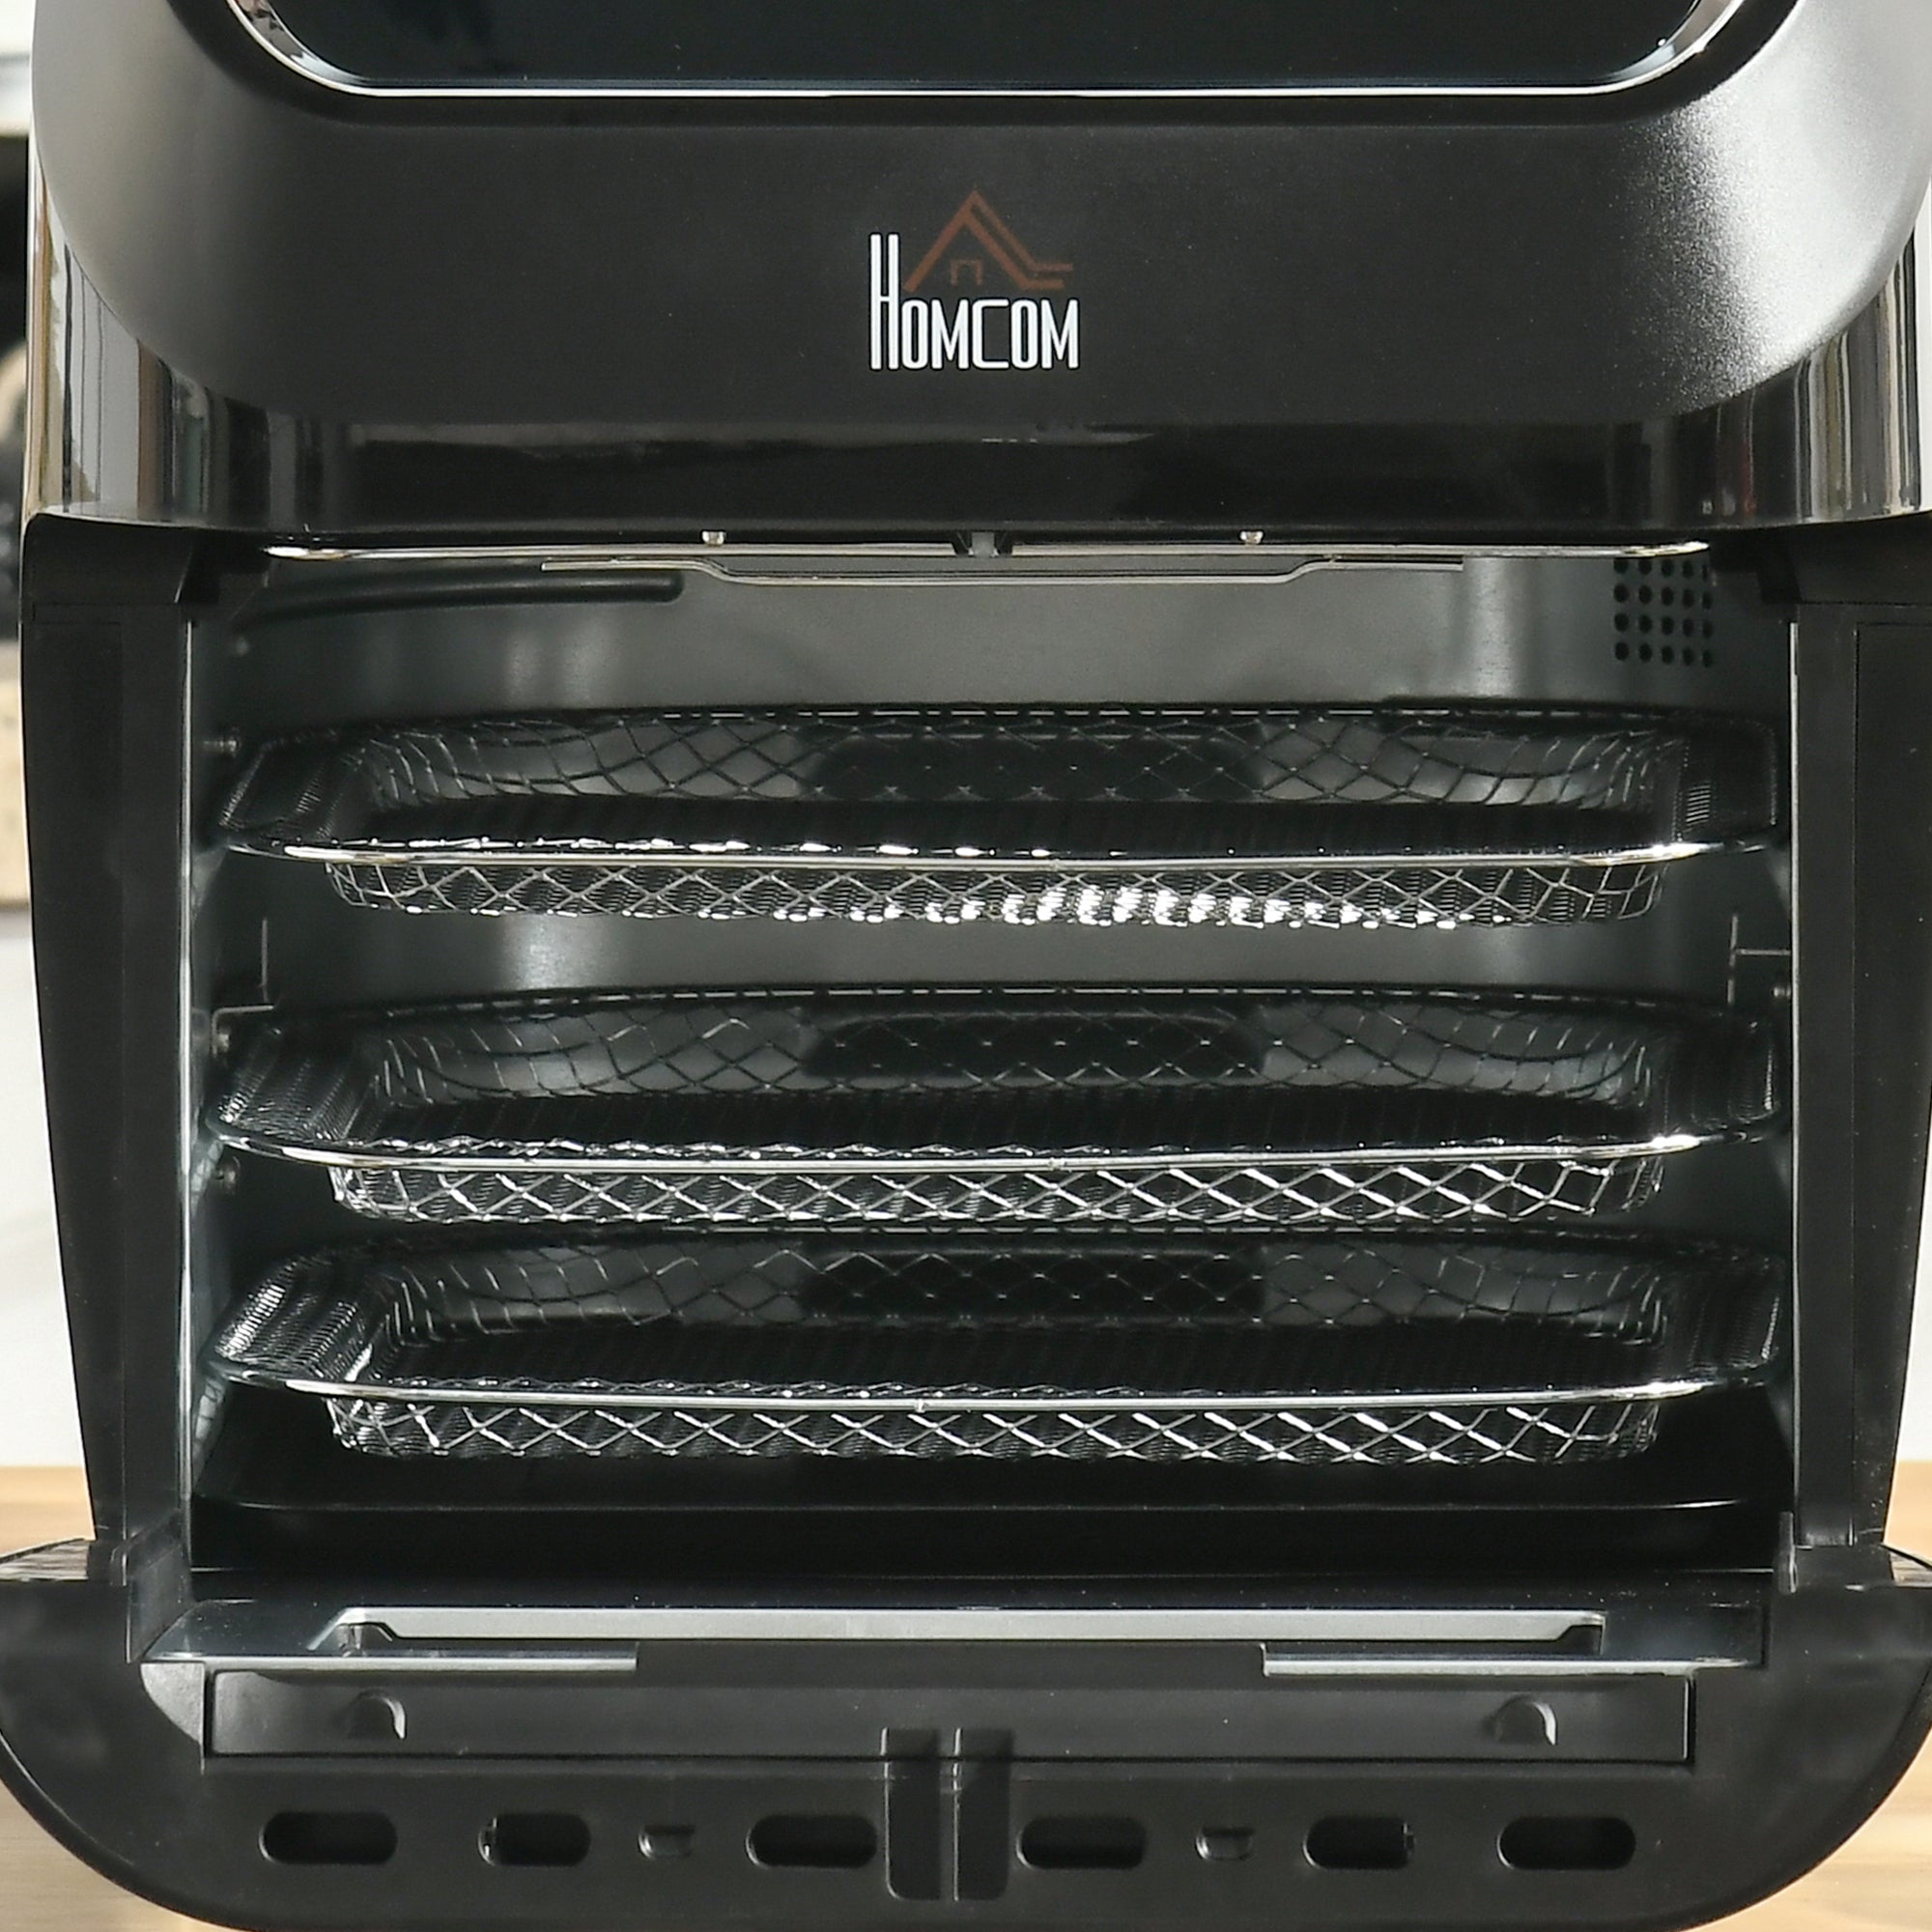 Homcom 12 Qt Air Fry Oven, 8 In 1 Countertop Oven